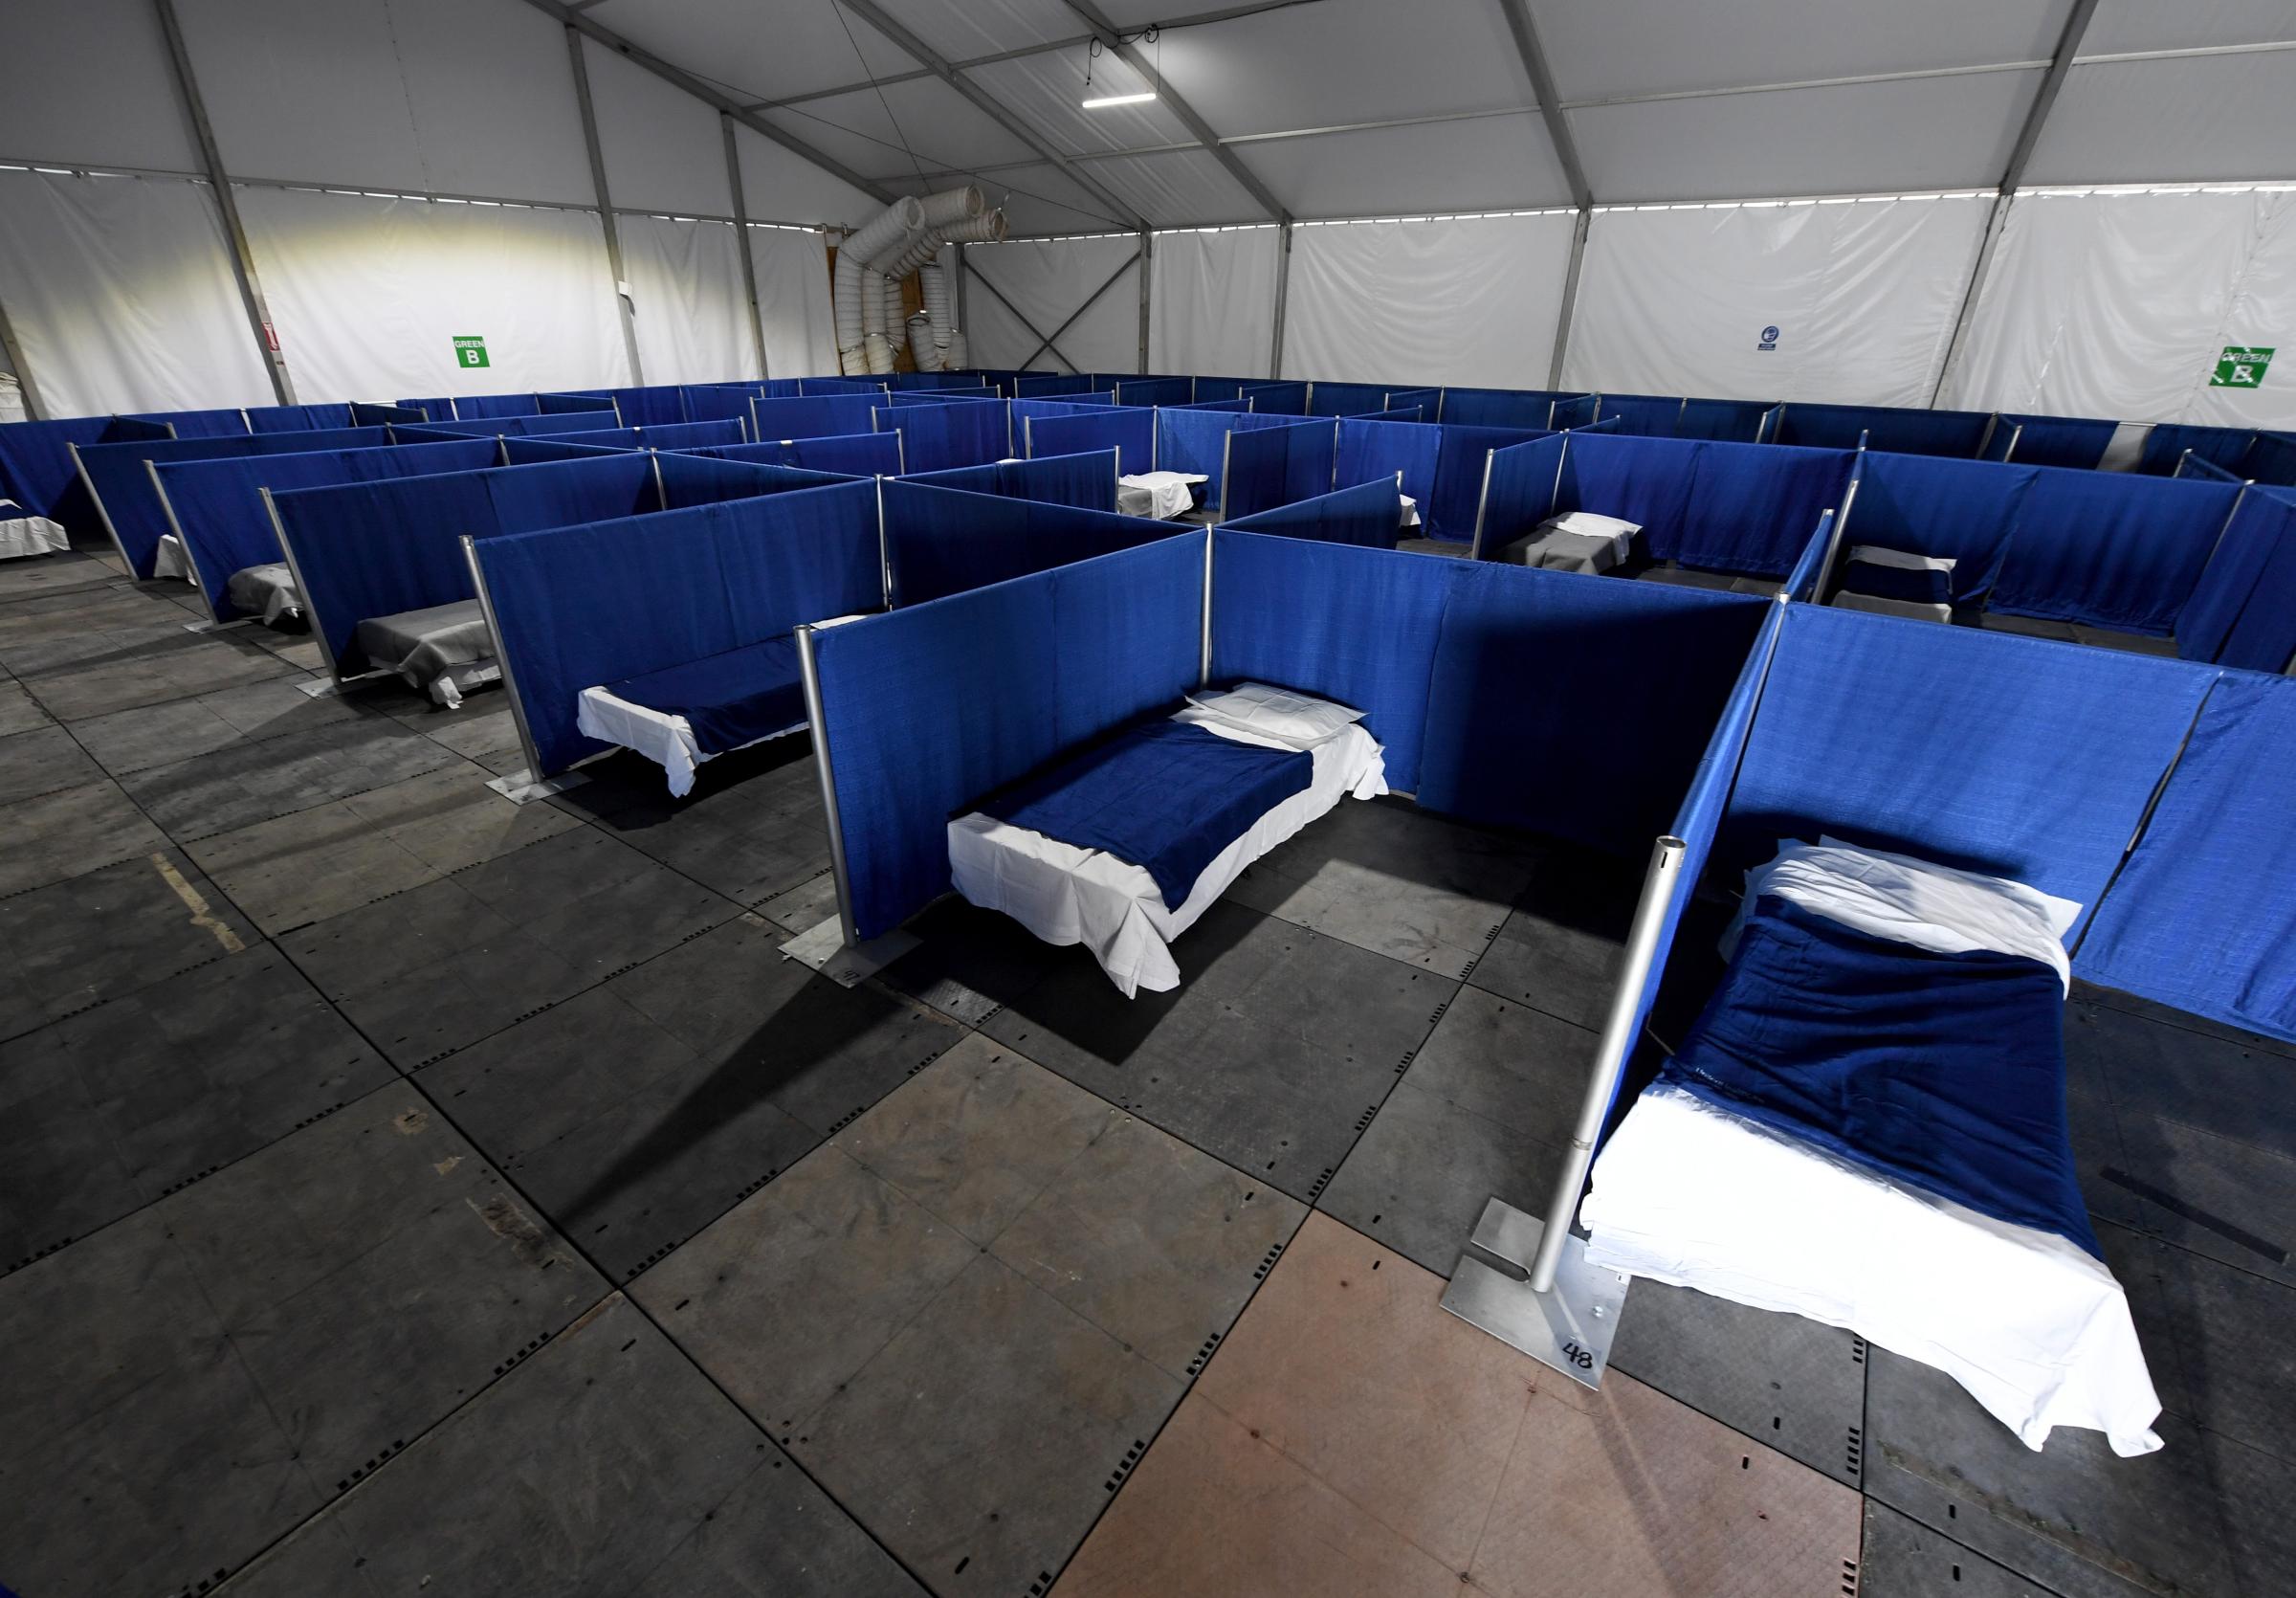 Isolation And Quarantining Center For Homeless Opens In Las Vegas During Coronavirus Pandemic